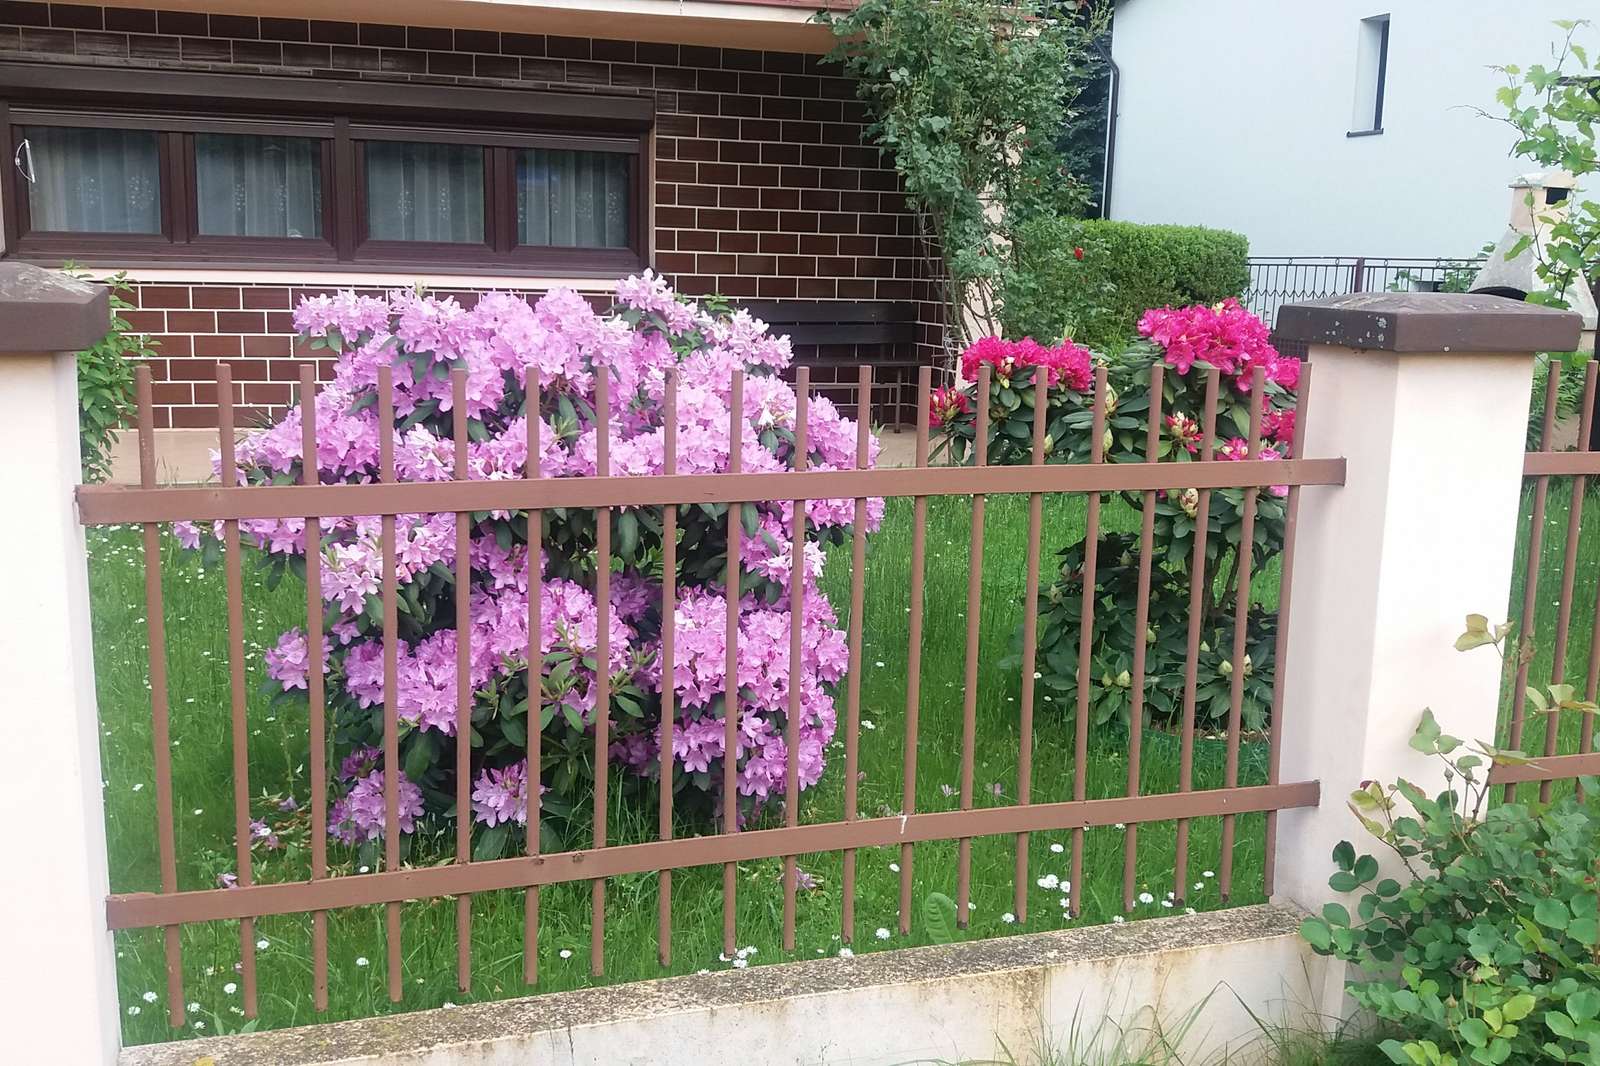 Rhododendren hinter dem Zaun. Online-Puzzle